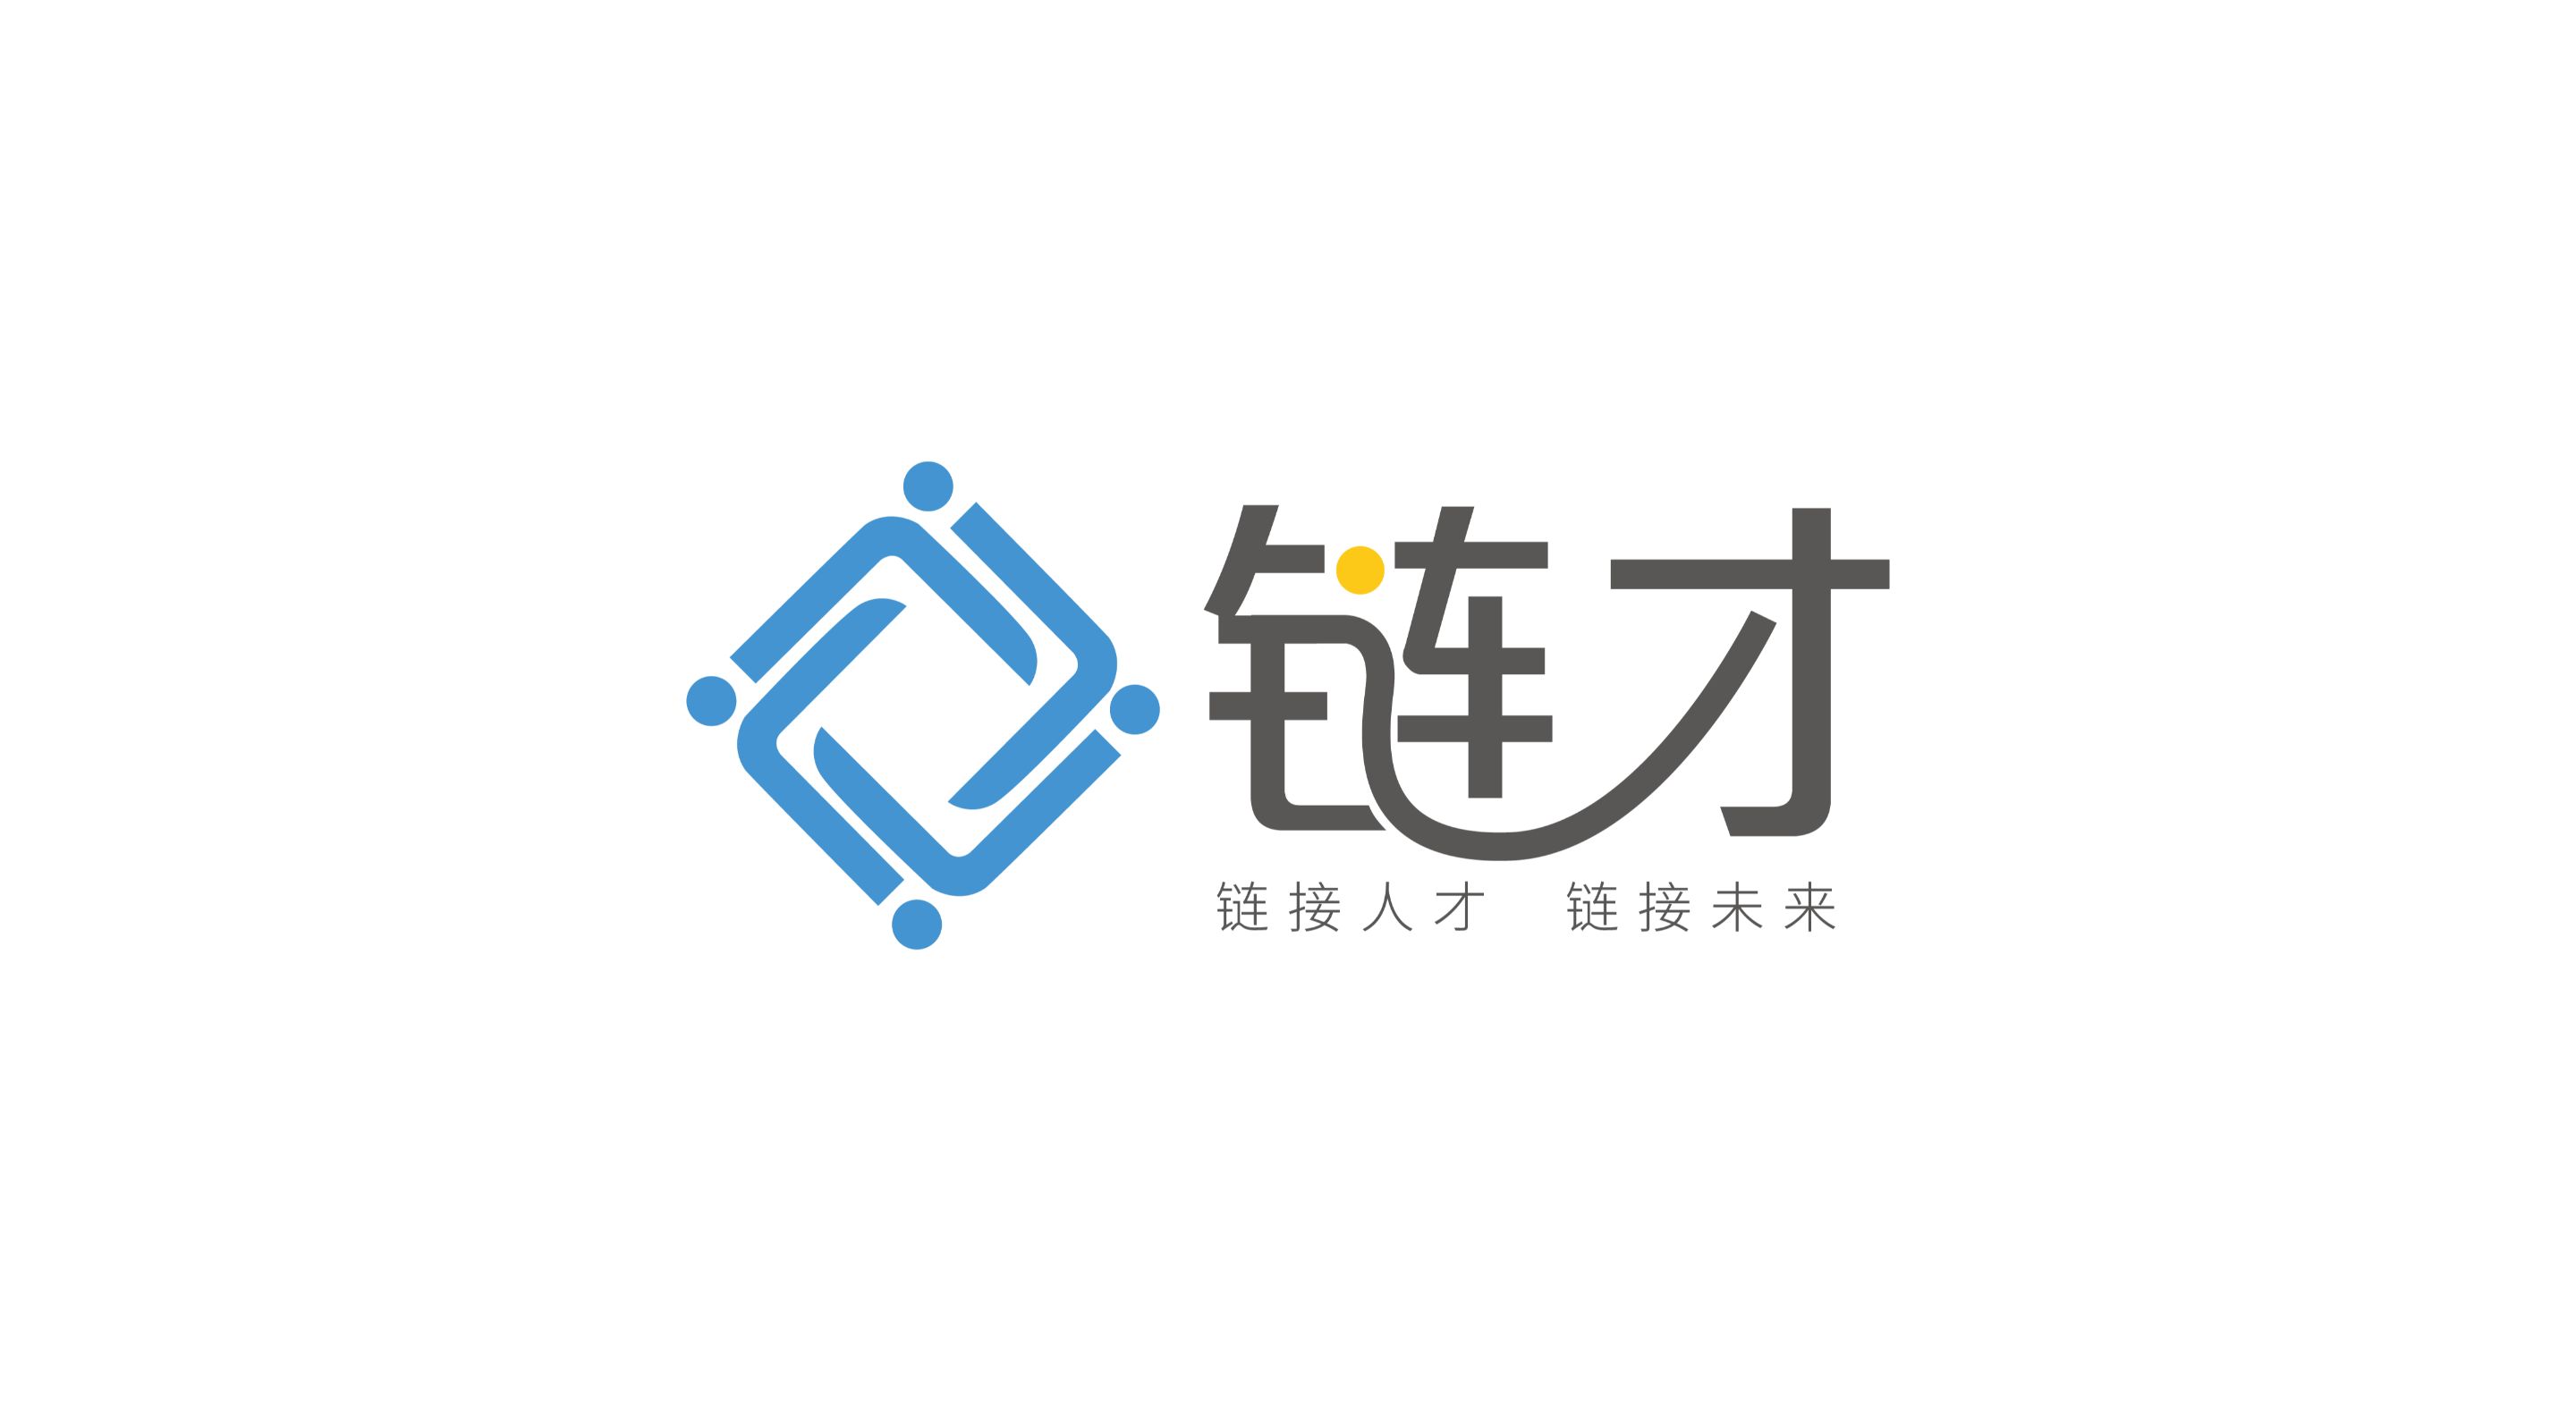 Suzhou Chain enterprise Consulting management Co., LTD logo